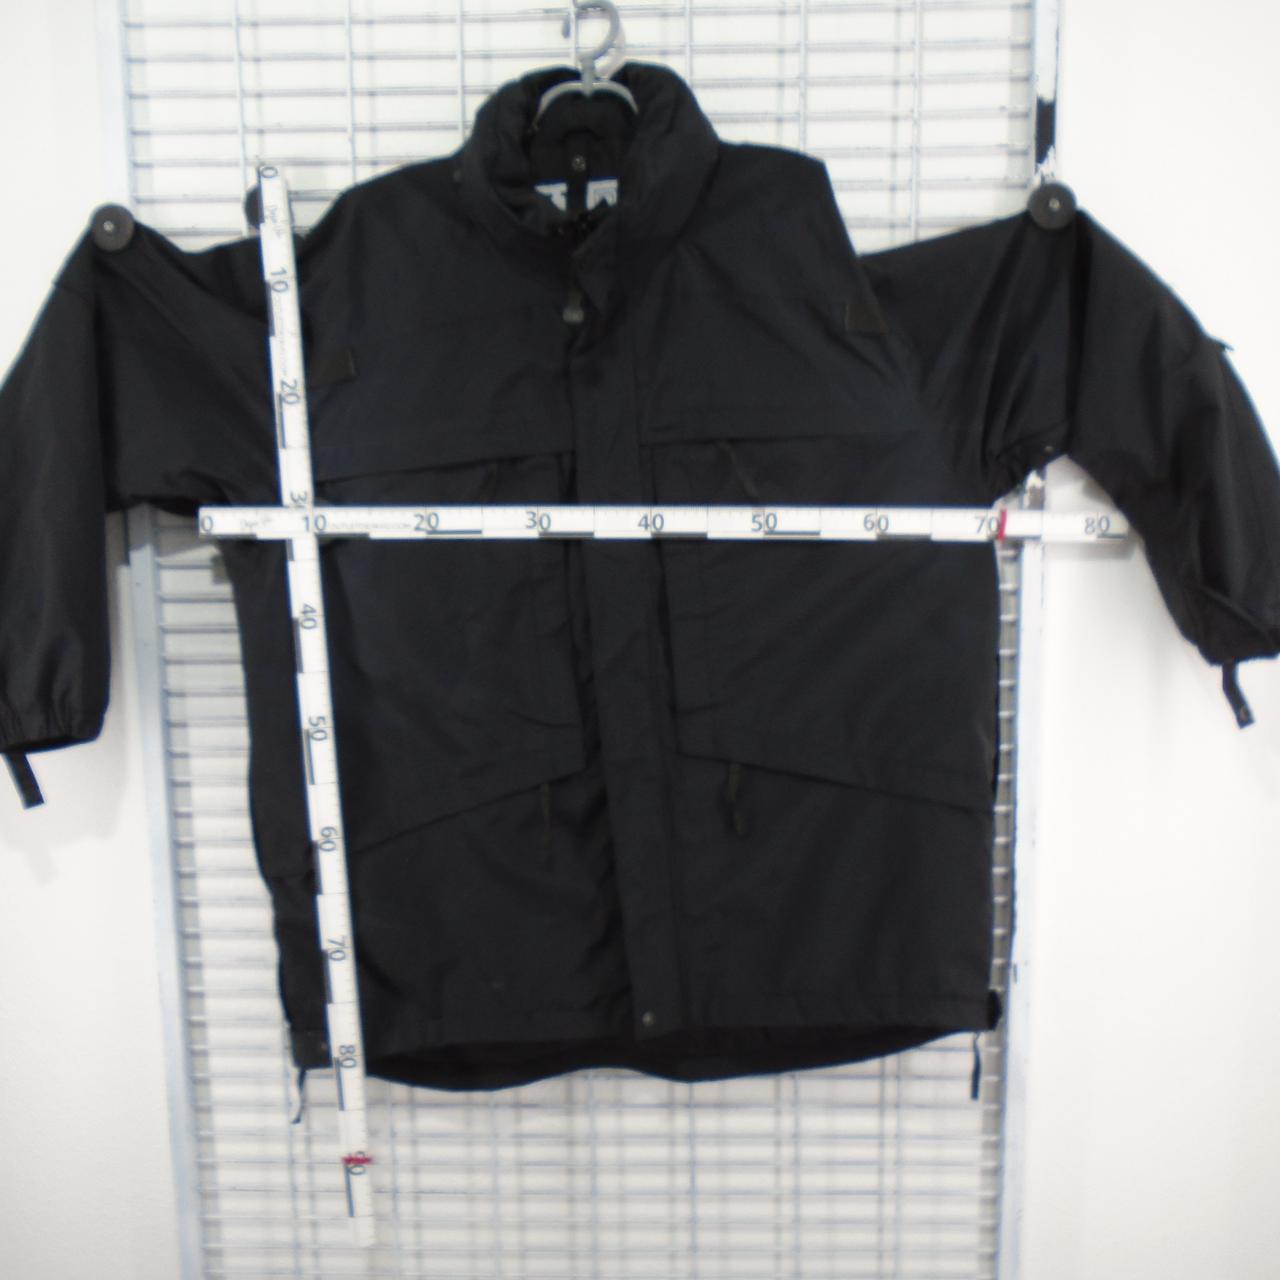 Men's Jacket Tactical 5.11. Black. XL. Used. Good